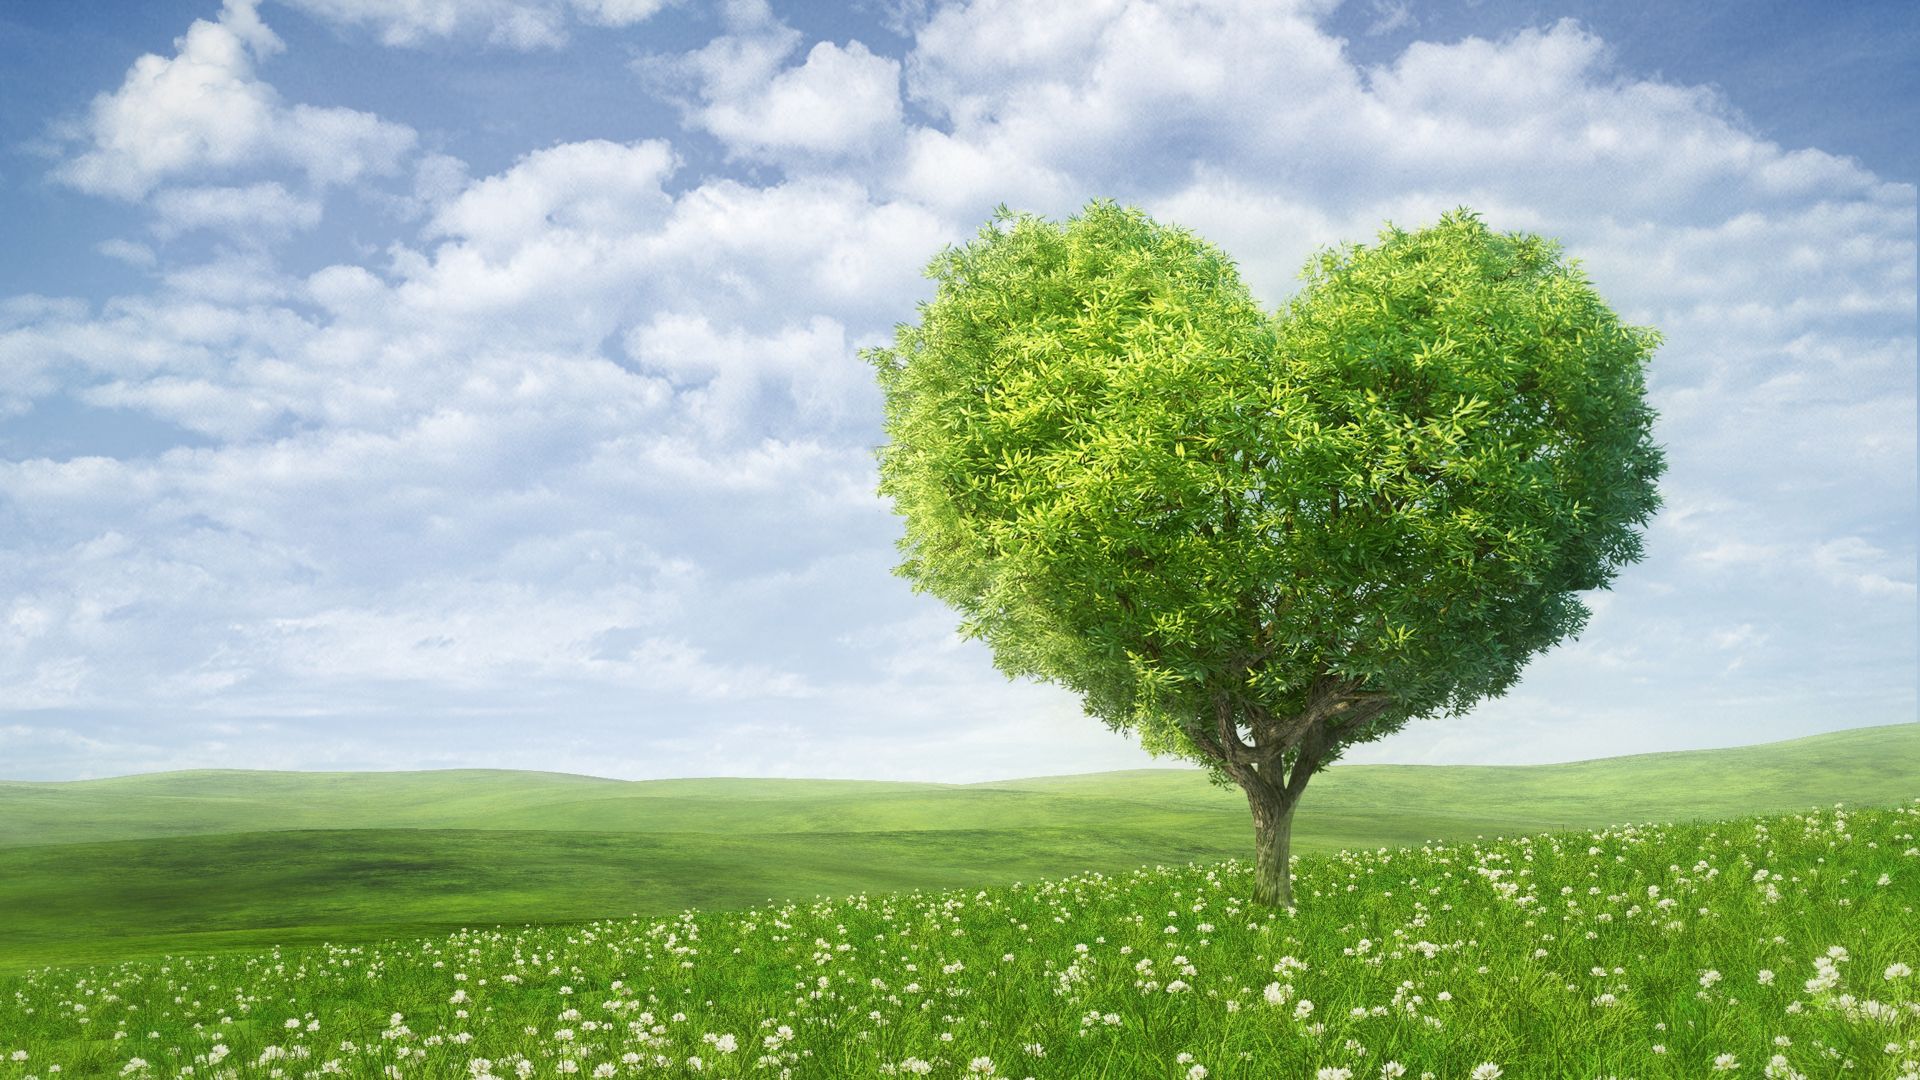 фото любовь, сердце, love image, heart, tree, 5k (horizontal)